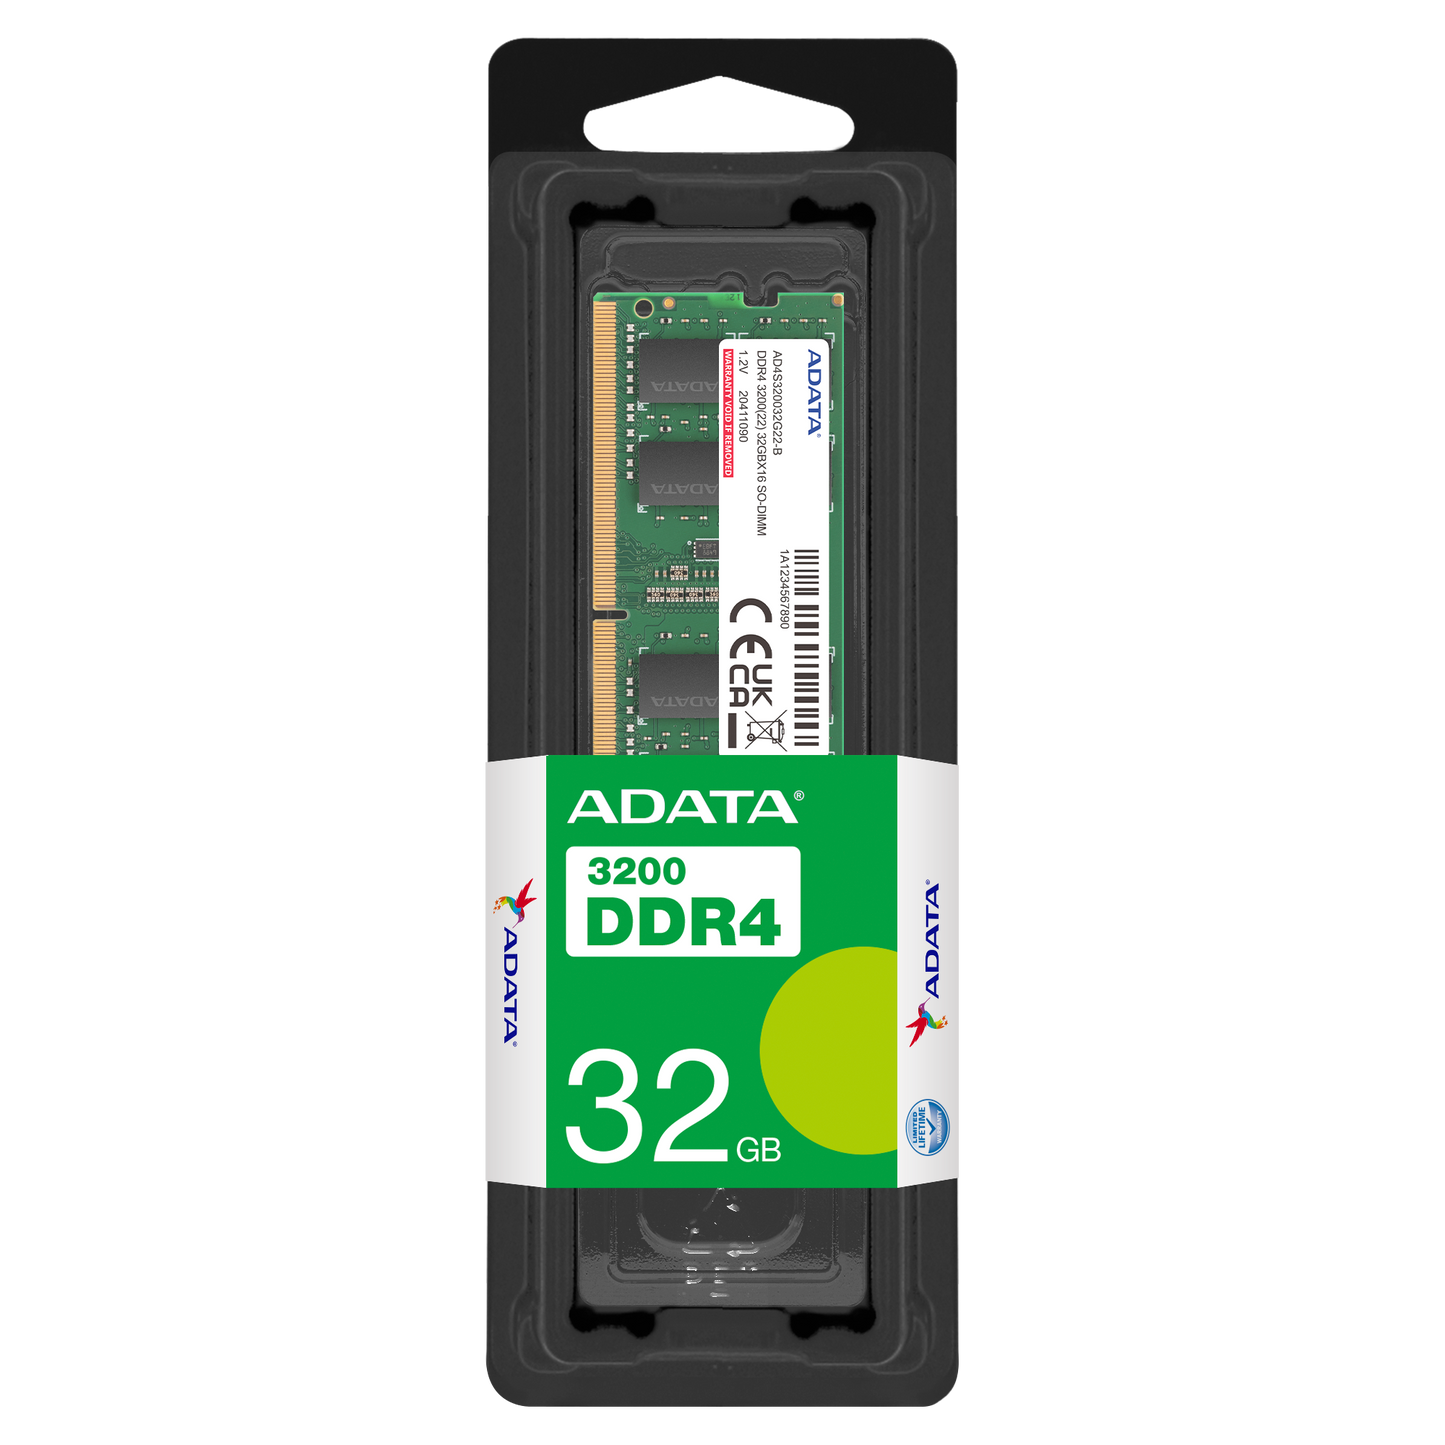 ADATA 32GB Premier DDR4 3200 SO-DIMM Memory Module  (AD-AD4S320032G22-SGN)